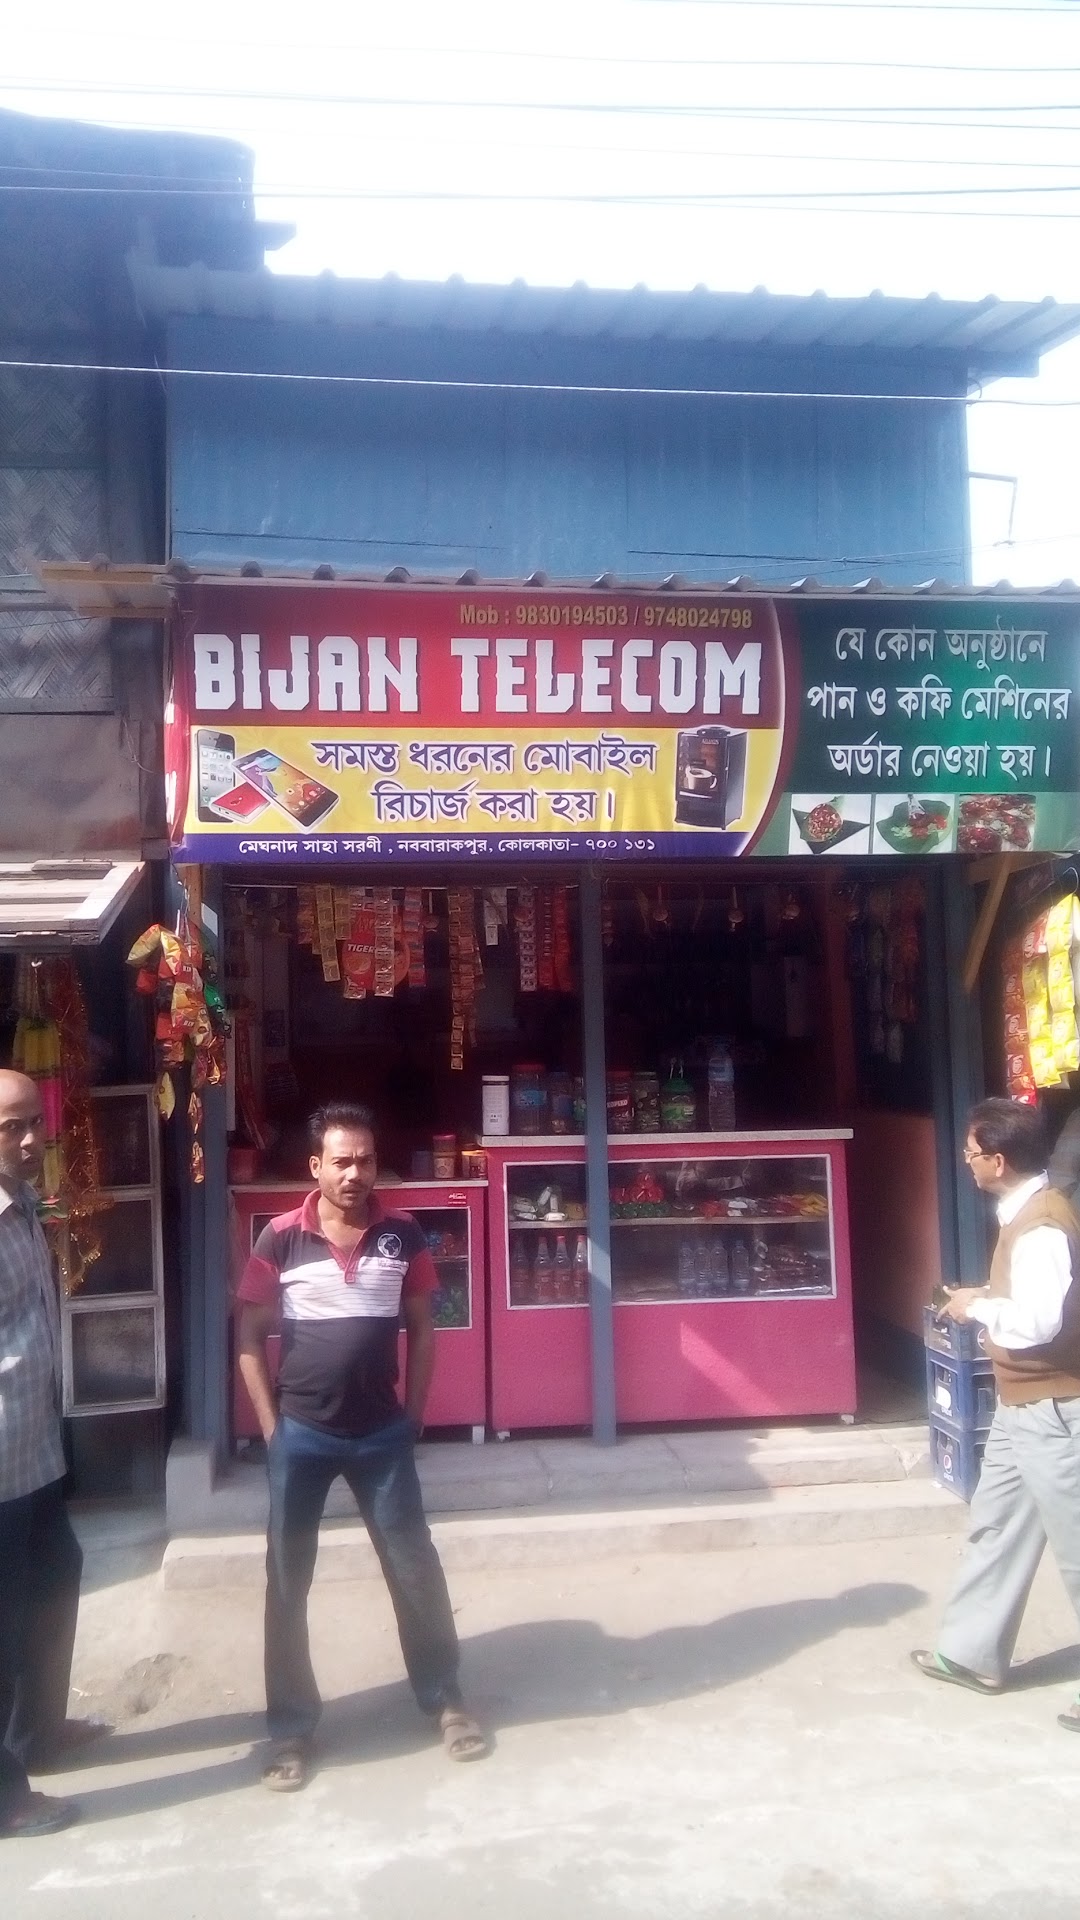 Bijan telecom and ice cream shop